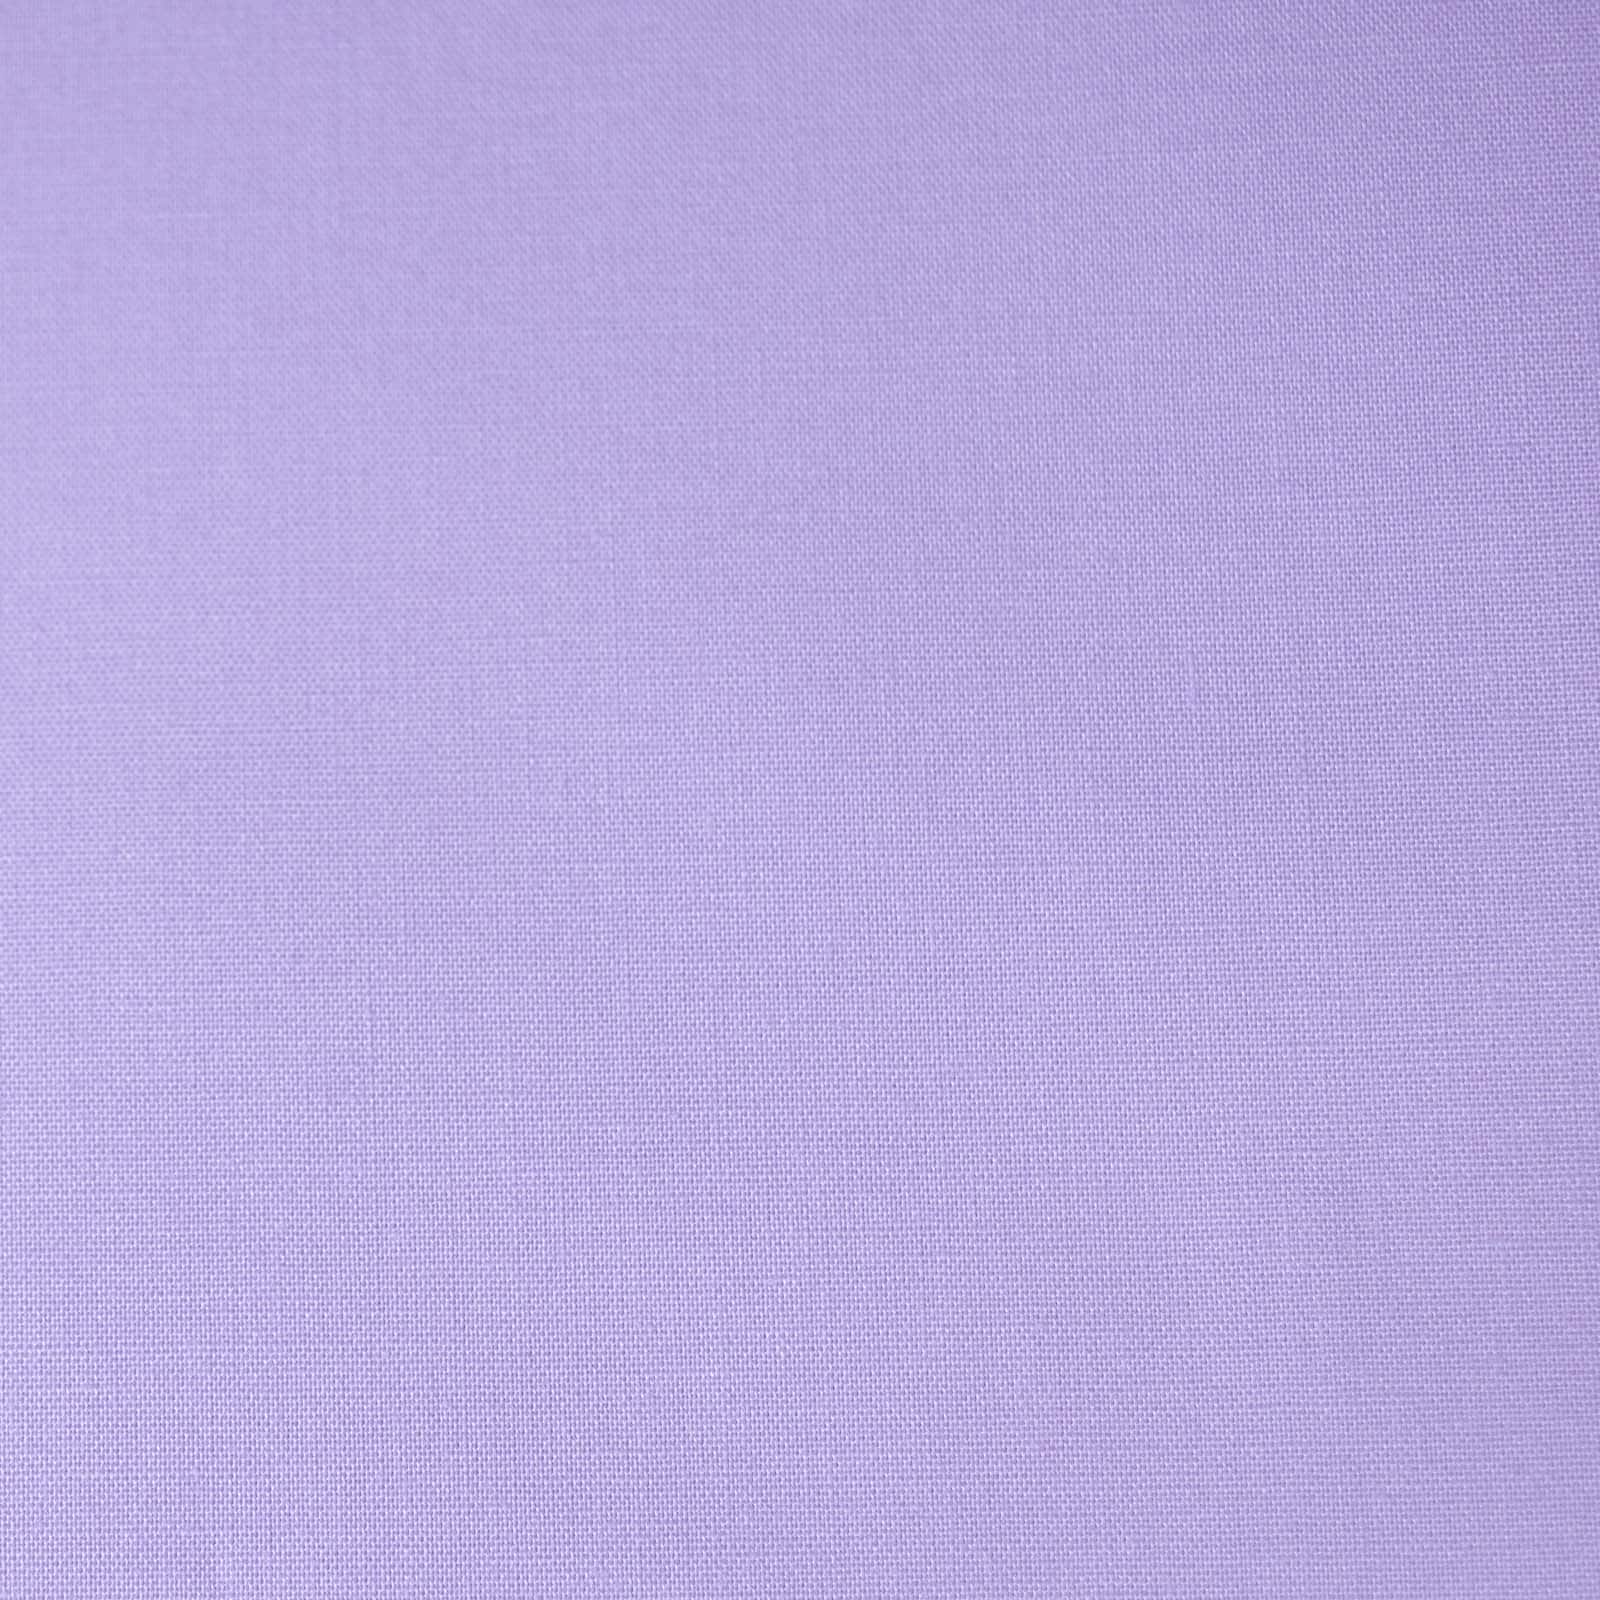 Purple Lavender Textured Cotton Wideback Fabric Per Yard